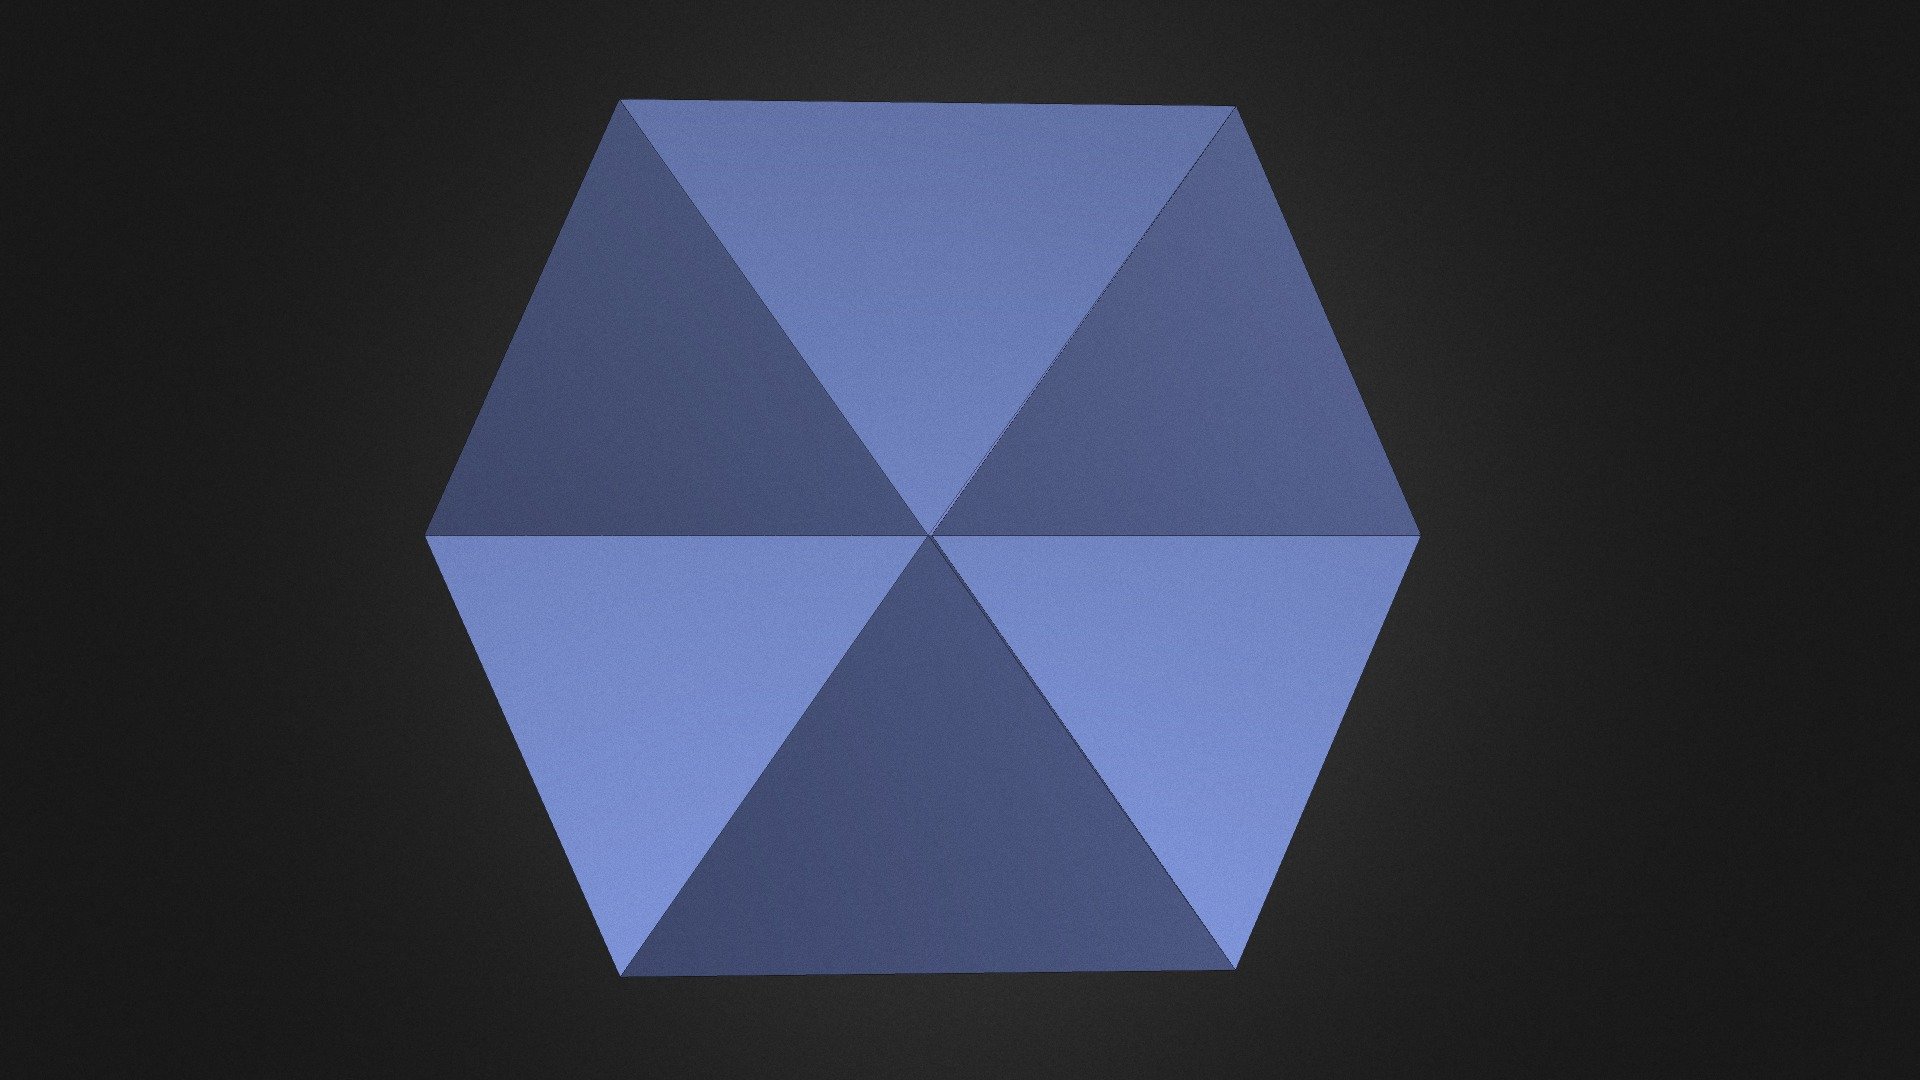 tetraedro sacred geometry - 6tetraedros - 3D model by Kmilo (@CamiloT) 3d model